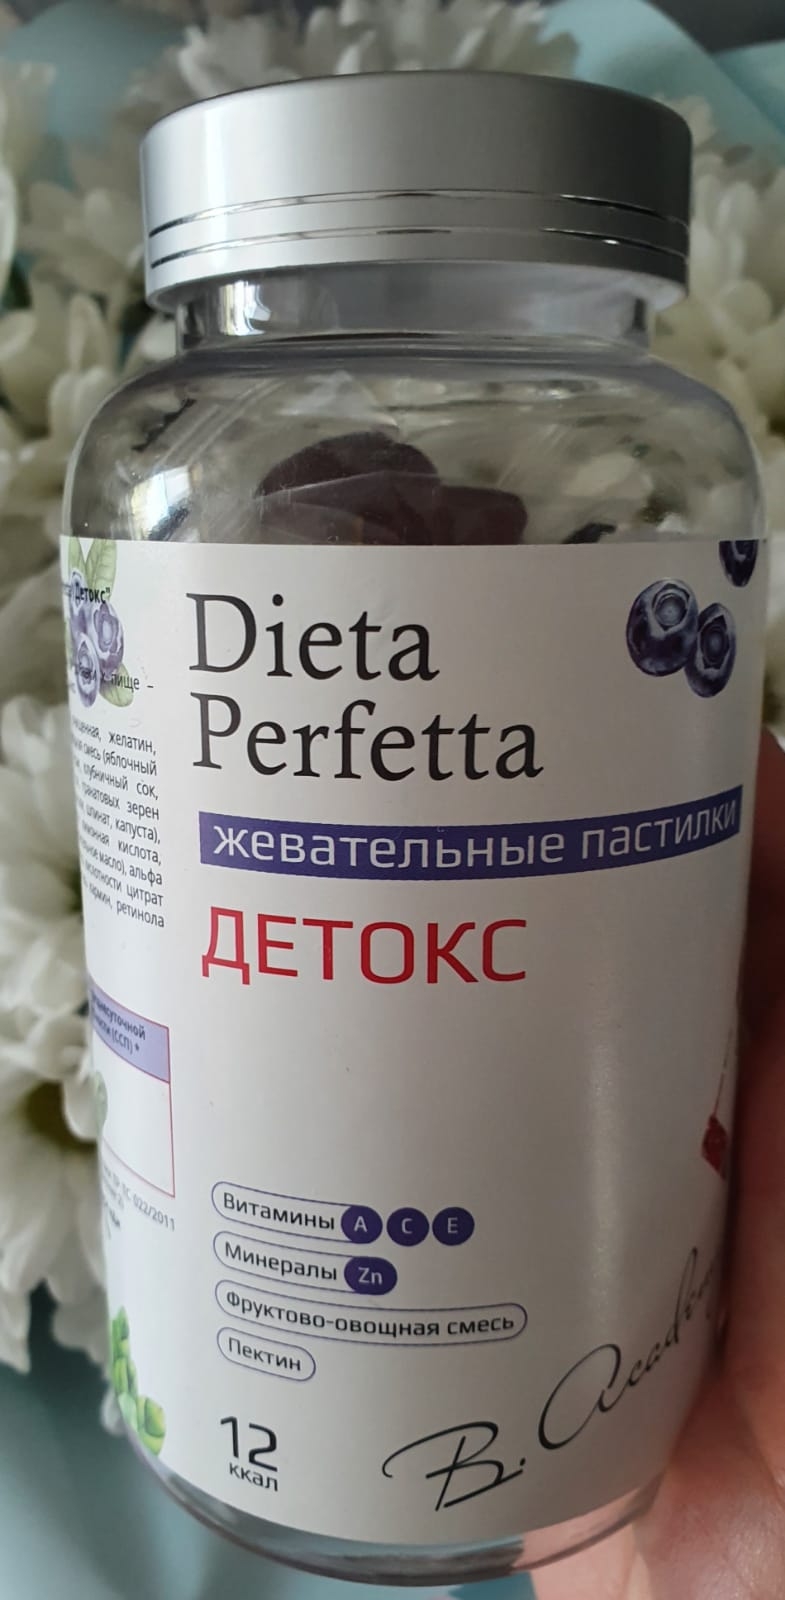 ДИЕТА ПЕРФЕТТА Dieta Perfetta. Детокс - Попробуй Детокс на вкус.